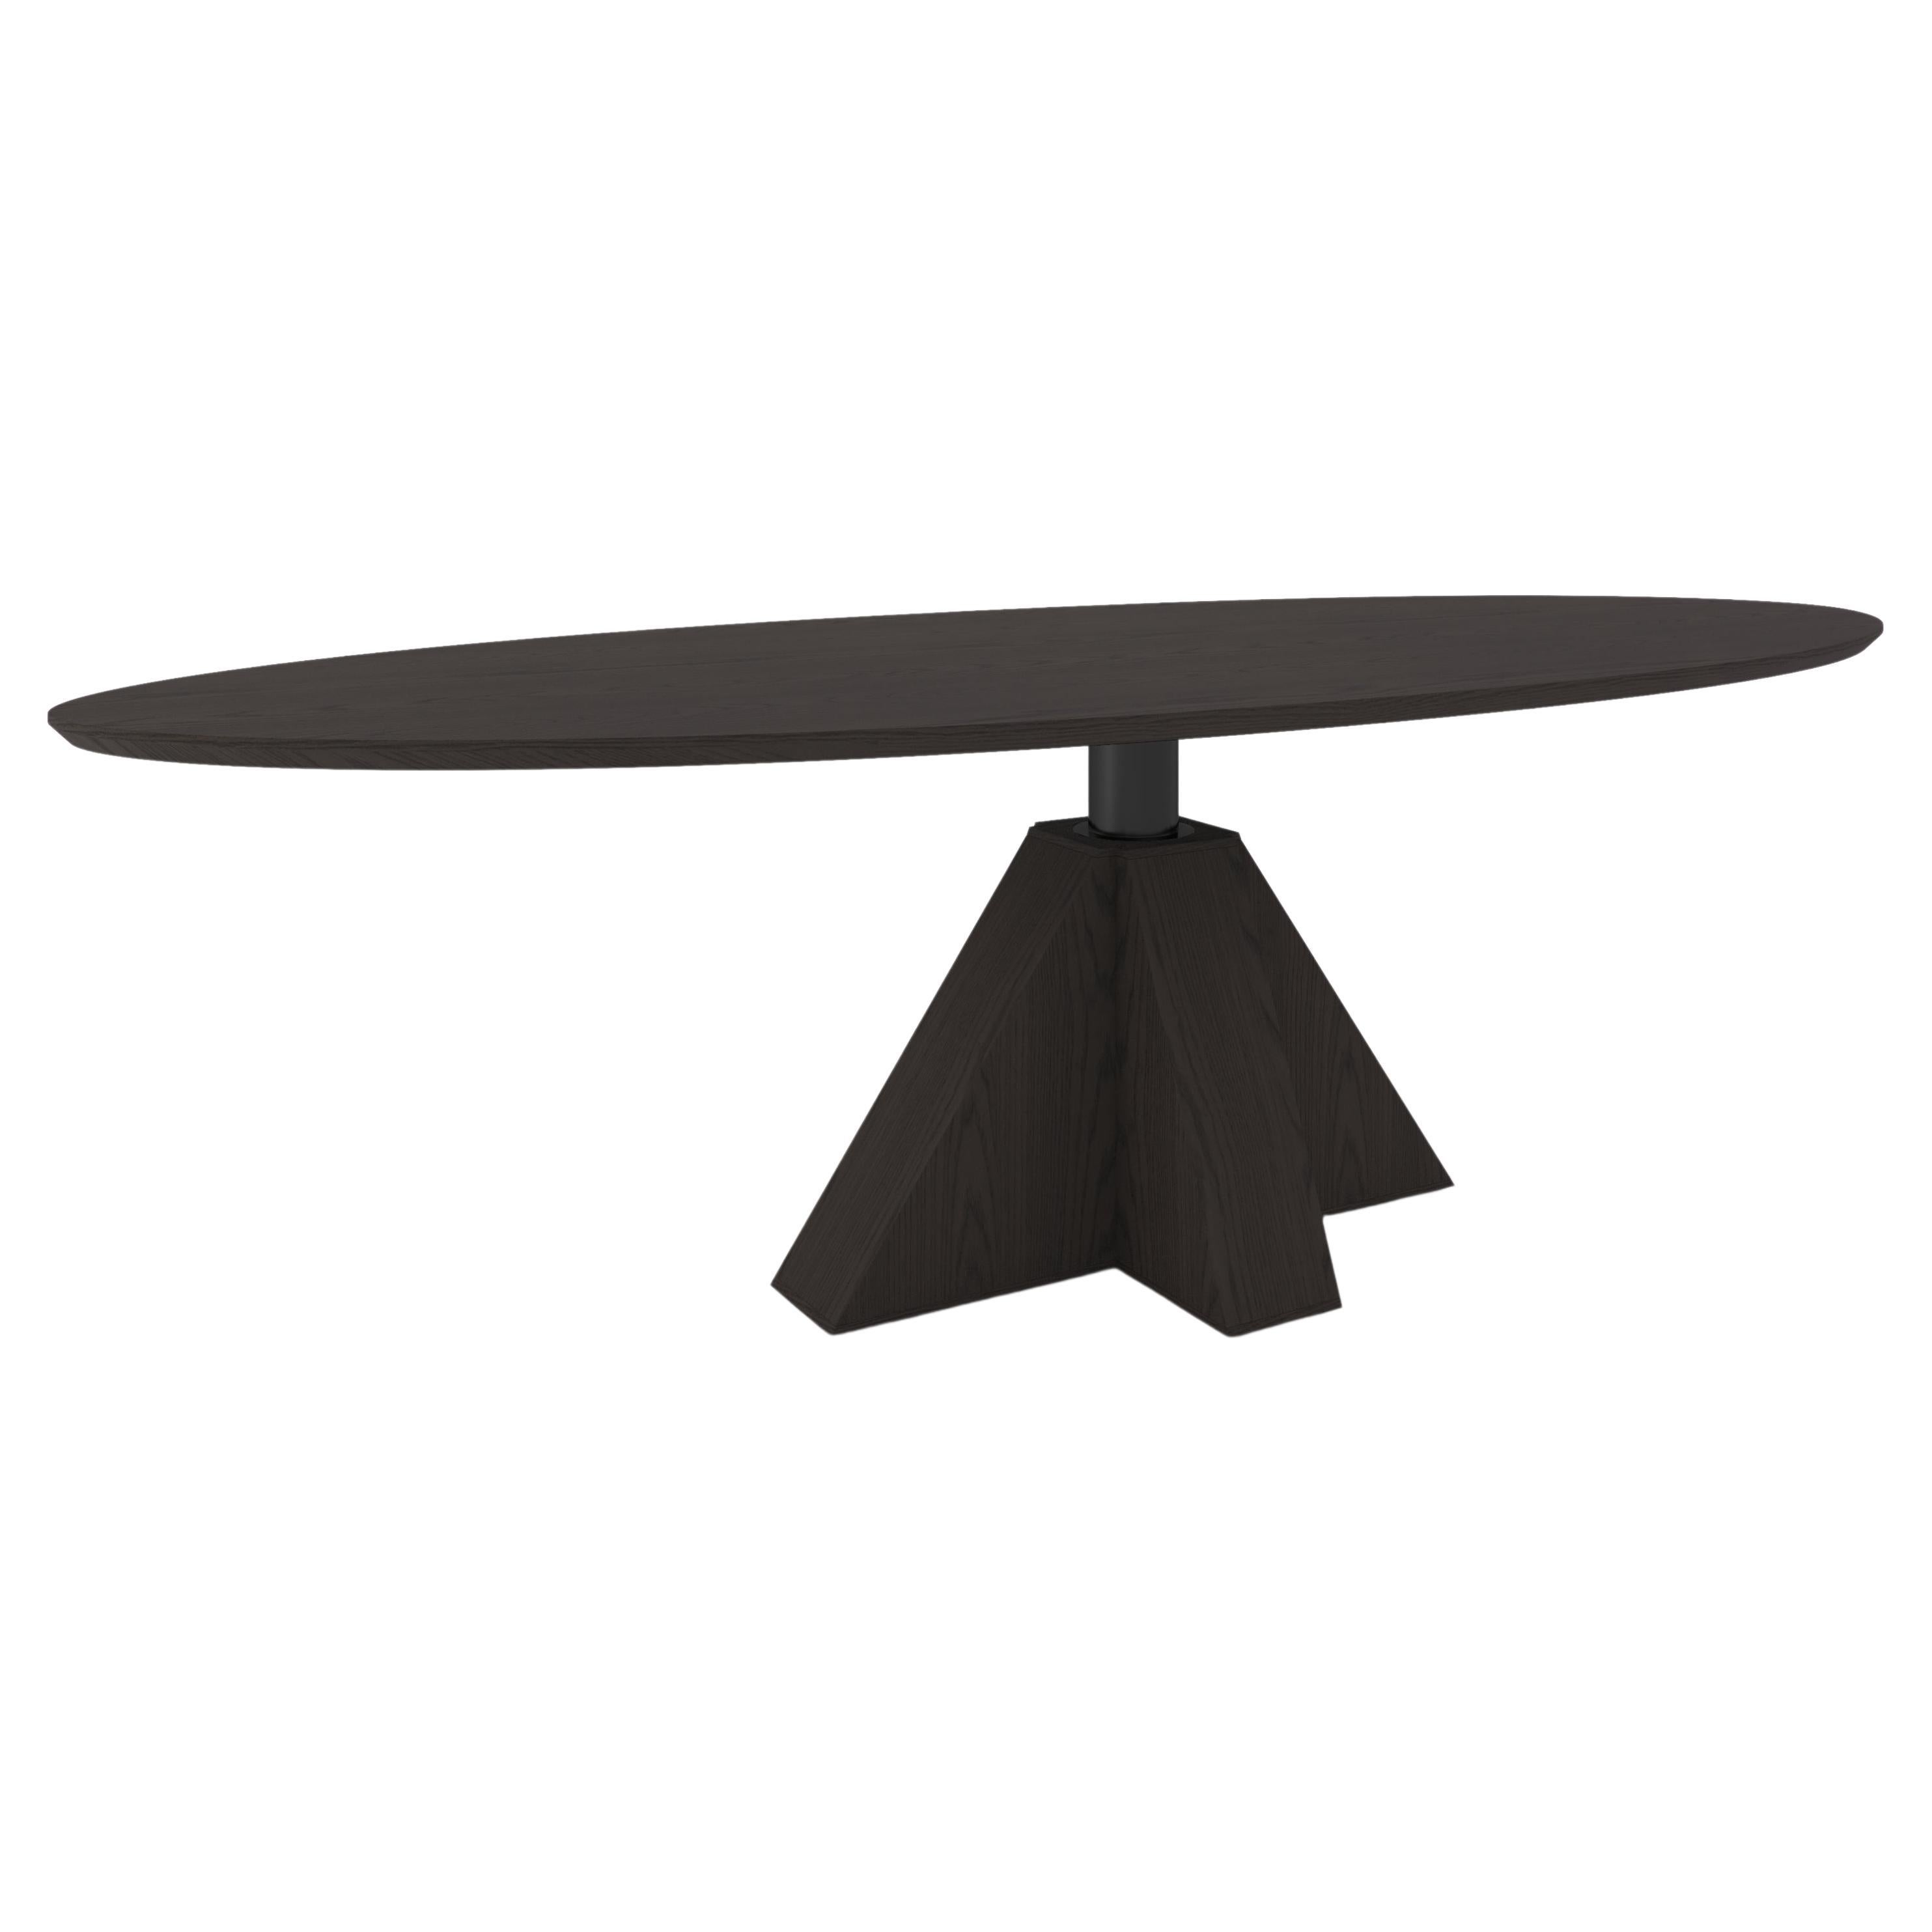 Table M-Oval de Daniel Boddam, 70"" x 41"", chêne fumé ou teinté